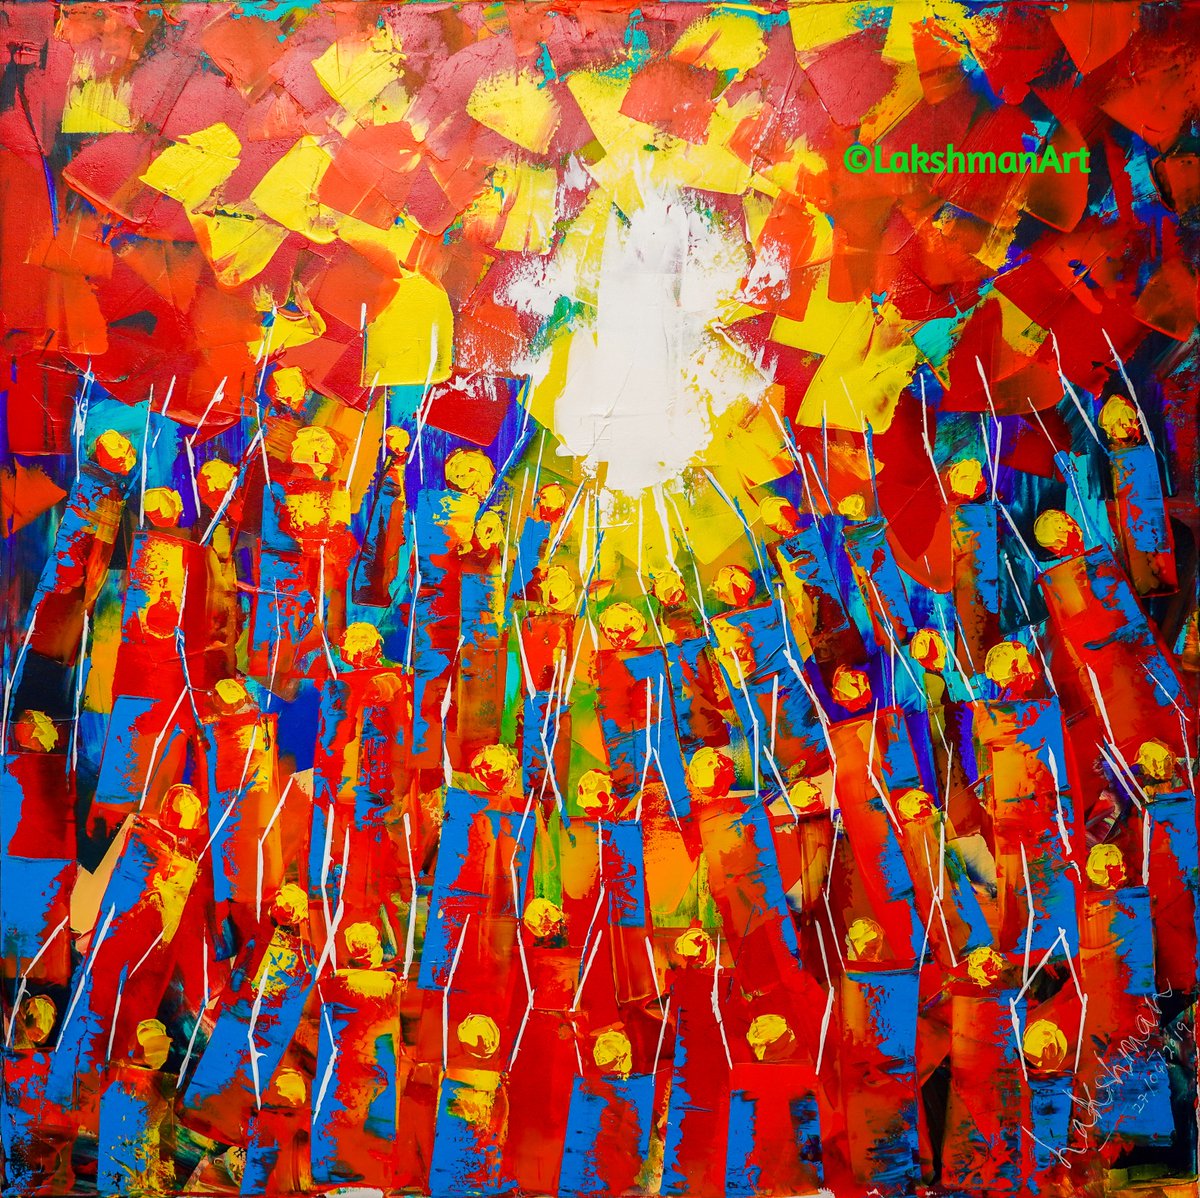 Ascension, 2019.  My reflection on the Easter 2019 bombings in Sri Lanka. Palette knife, acrylic on canvas.🎨Lakshmanart.com #acrylicpainting #art #SriLanka #Linlithgow #Scotland #landscapepainting #landscapeart #arte #scottishartist youtube.com/@LakshmanArt-m…